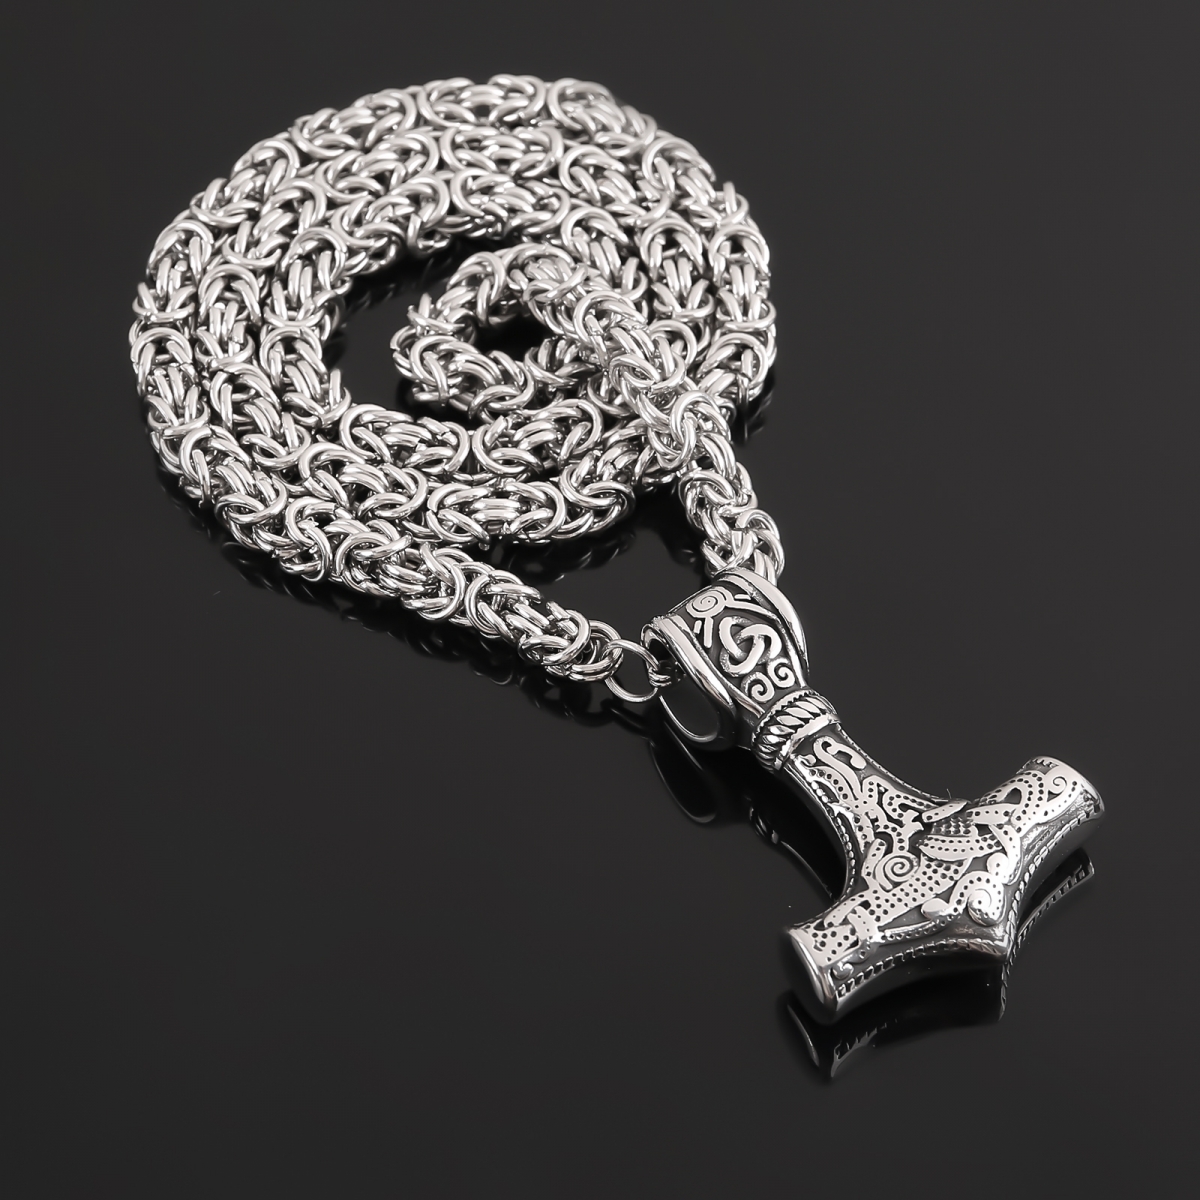 Giant Mjolnir Necklace US$8/PC-NORSECOLLECTION- Viking Jewelry,Viking Necklace,Viking Bracelet,Viking Rings,Viking Mugs,Viking Accessories,Viking Crafts